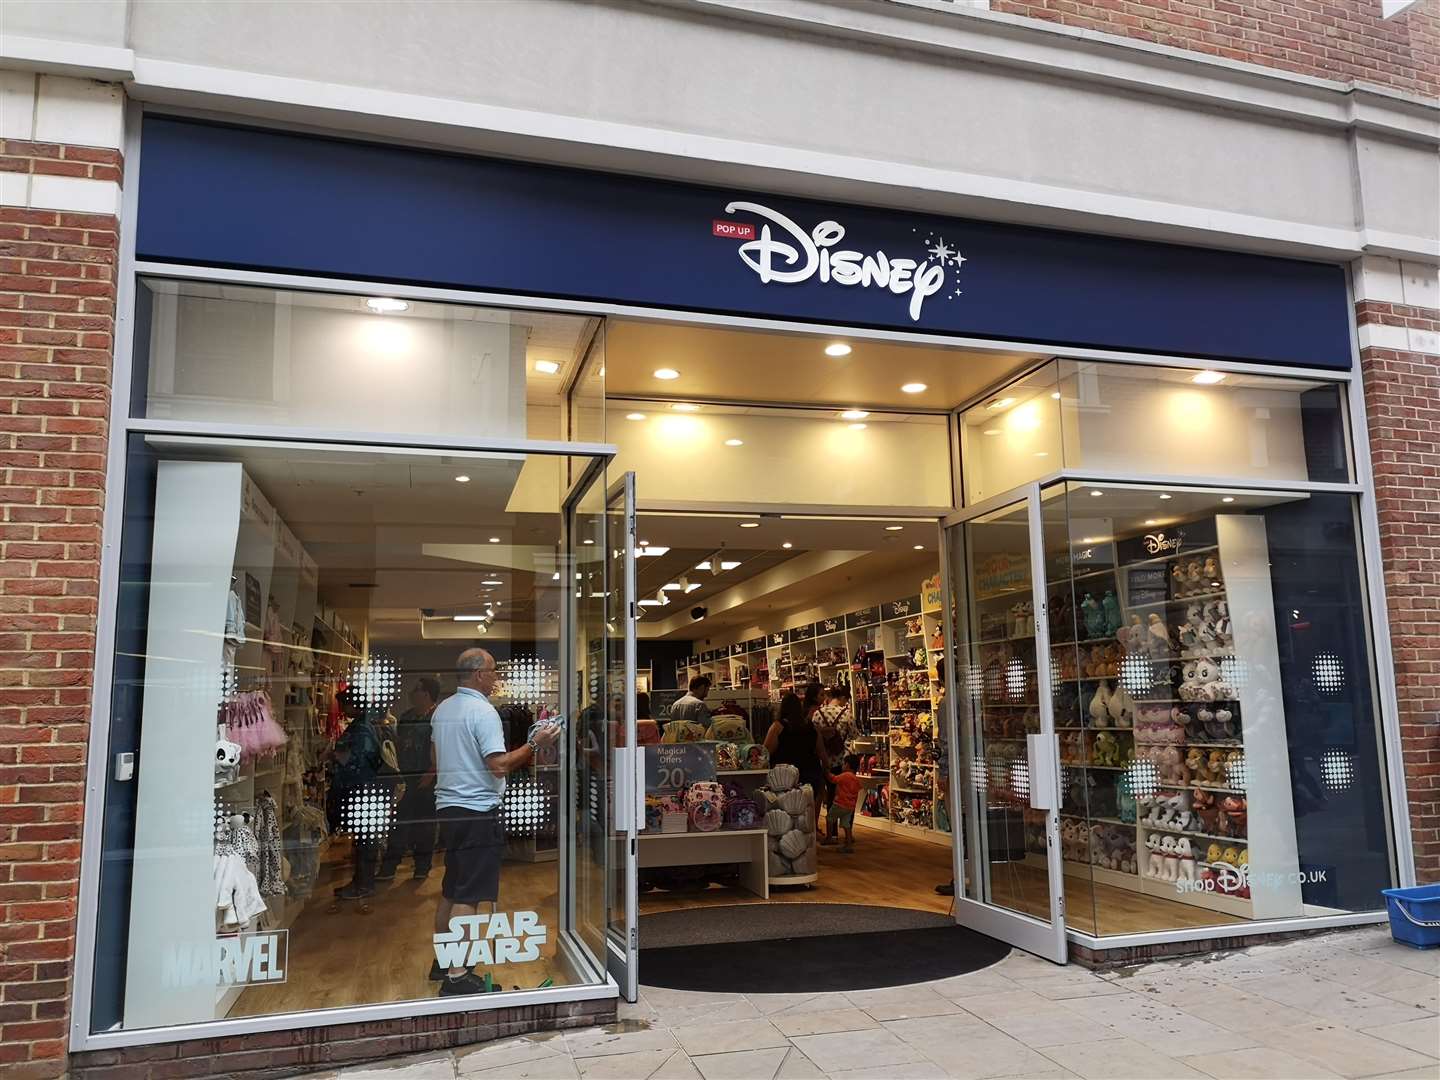 Disney store at Canterbury, on July